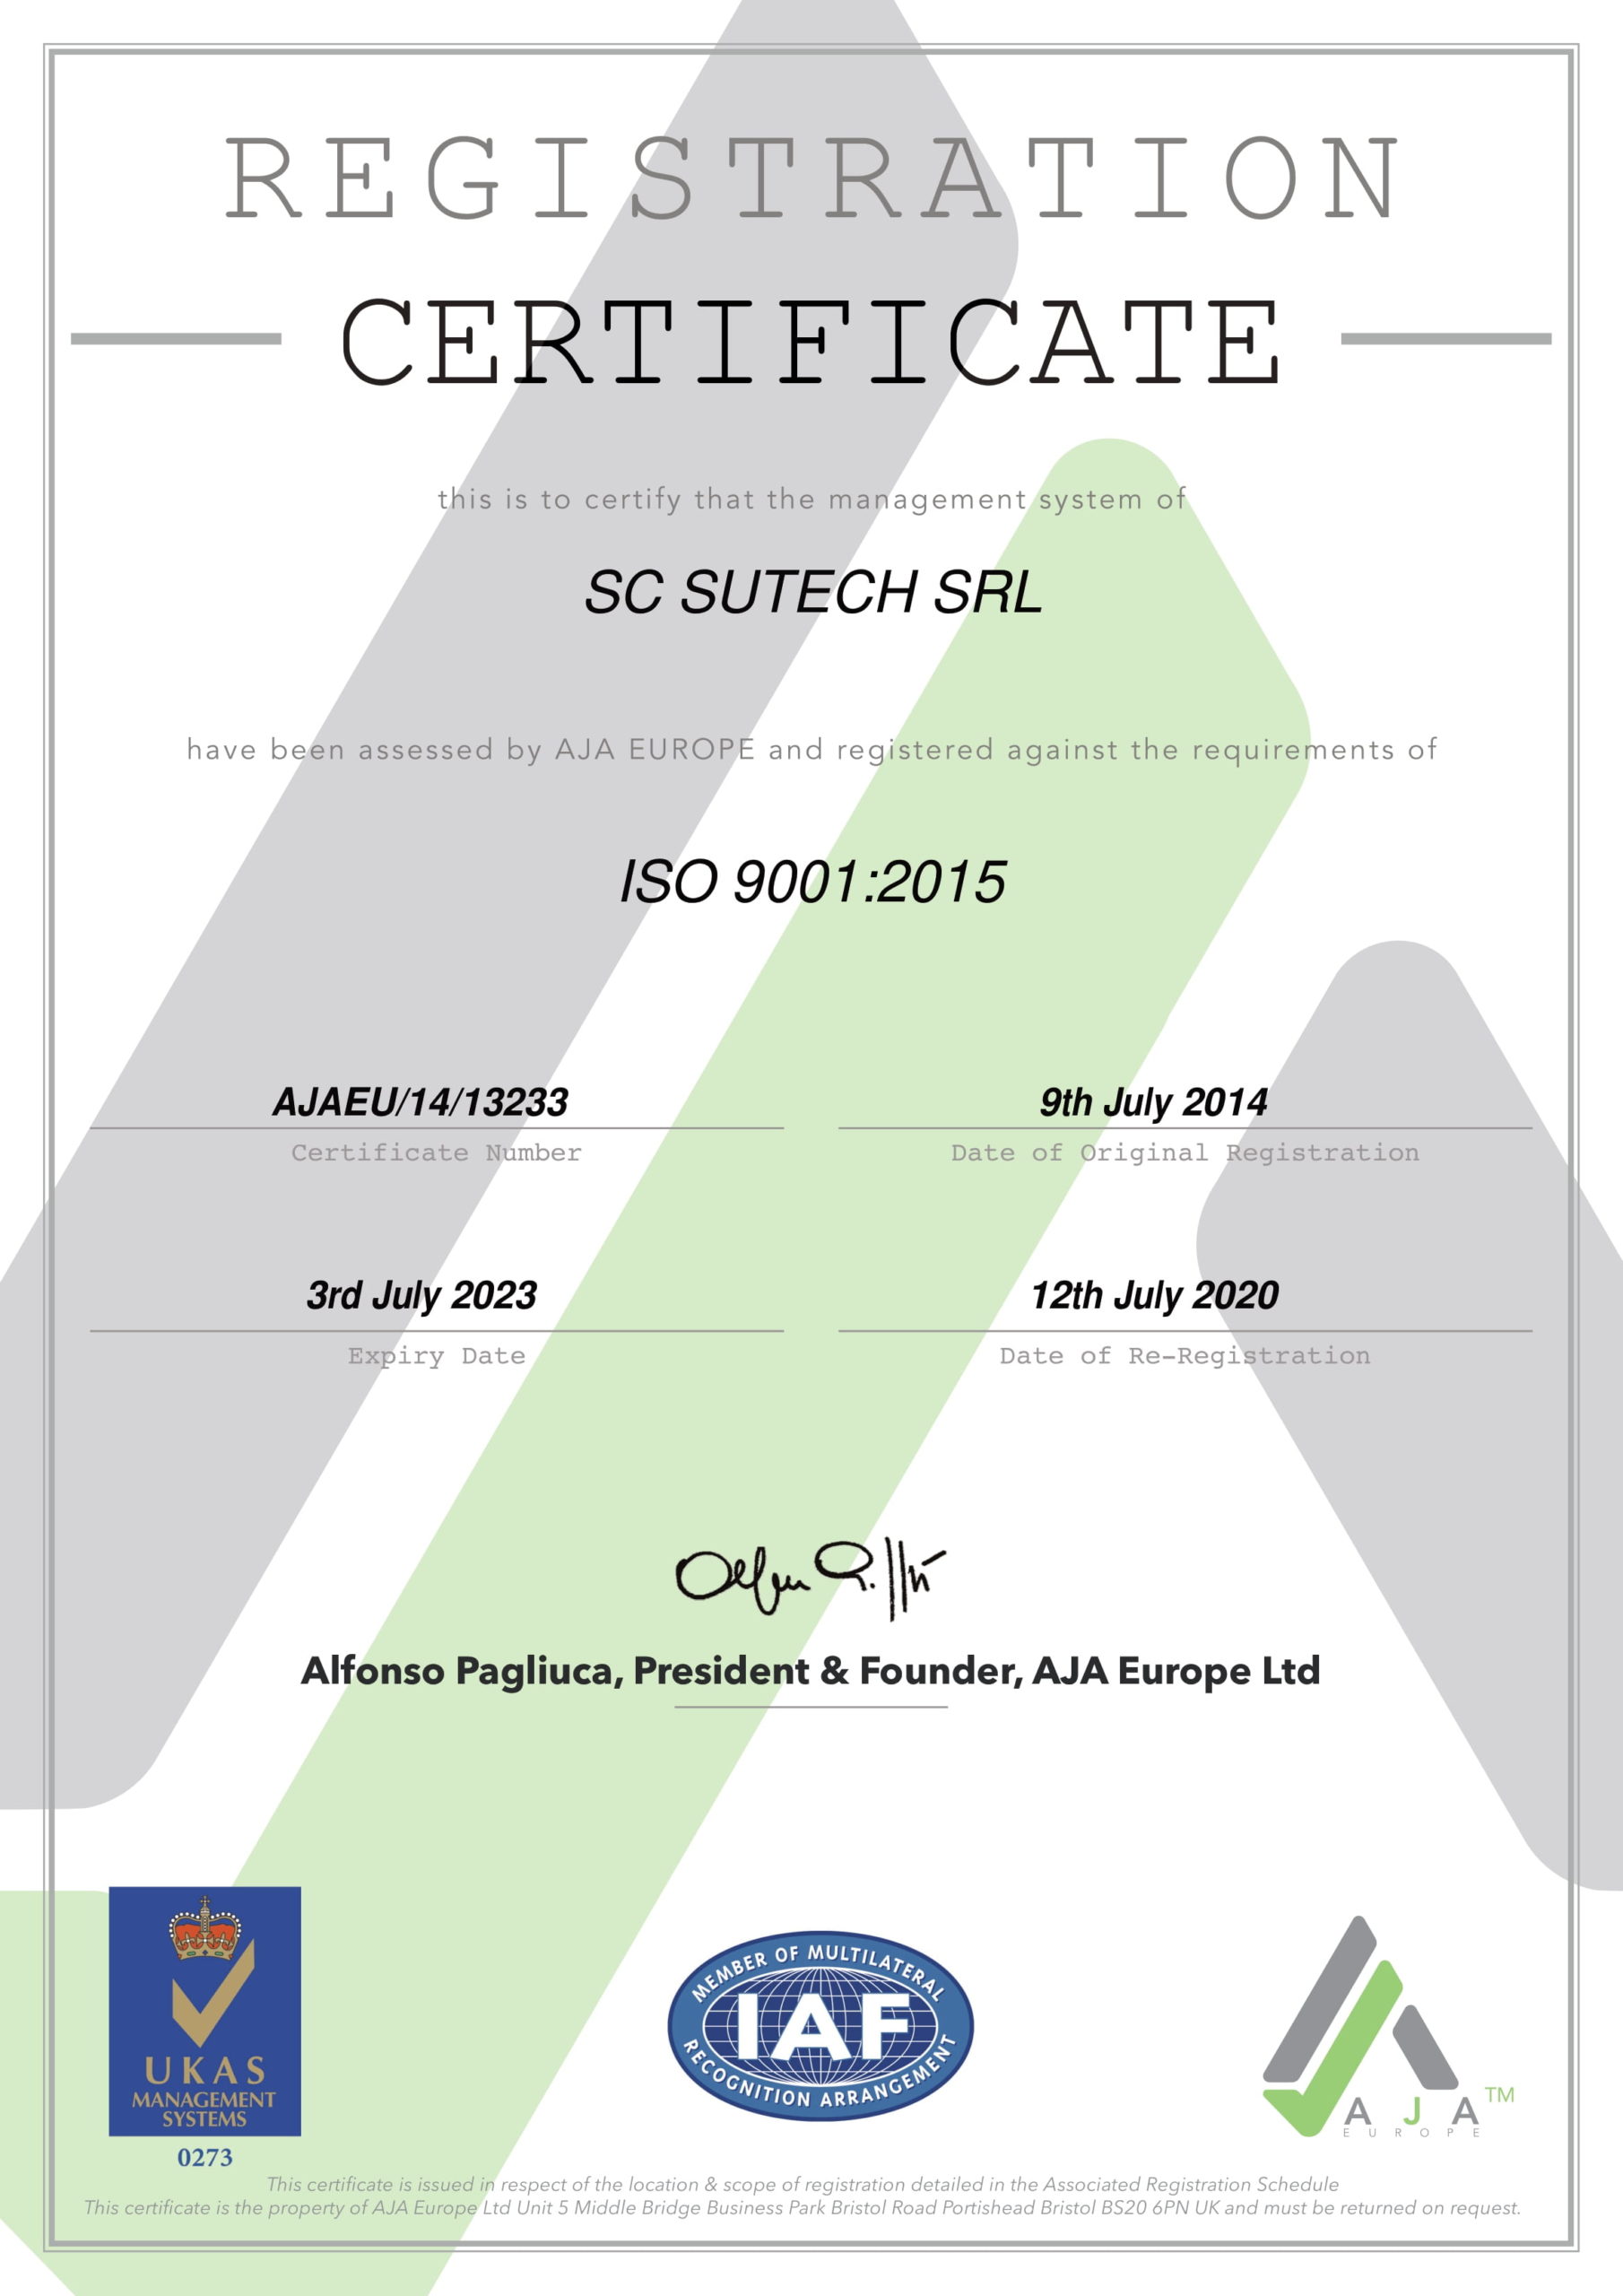 //sutech.ro/wp-content/uploads/2021/08/CERTIFICAT-ISO-9001-SUTECH-1-scaled.jpg